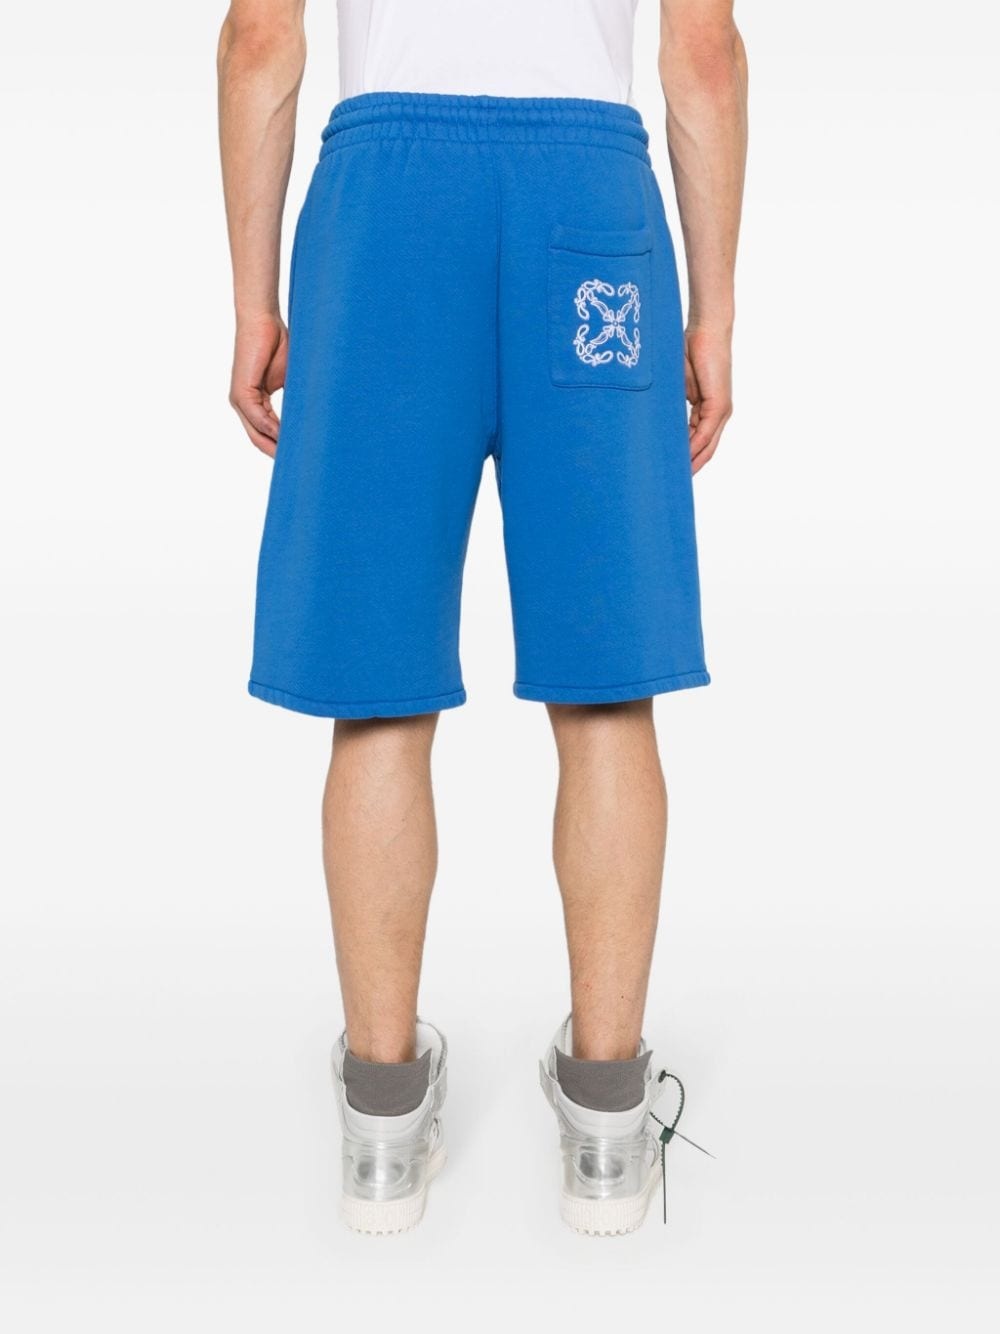 Bandana Arrows-embroidered shorts - 4